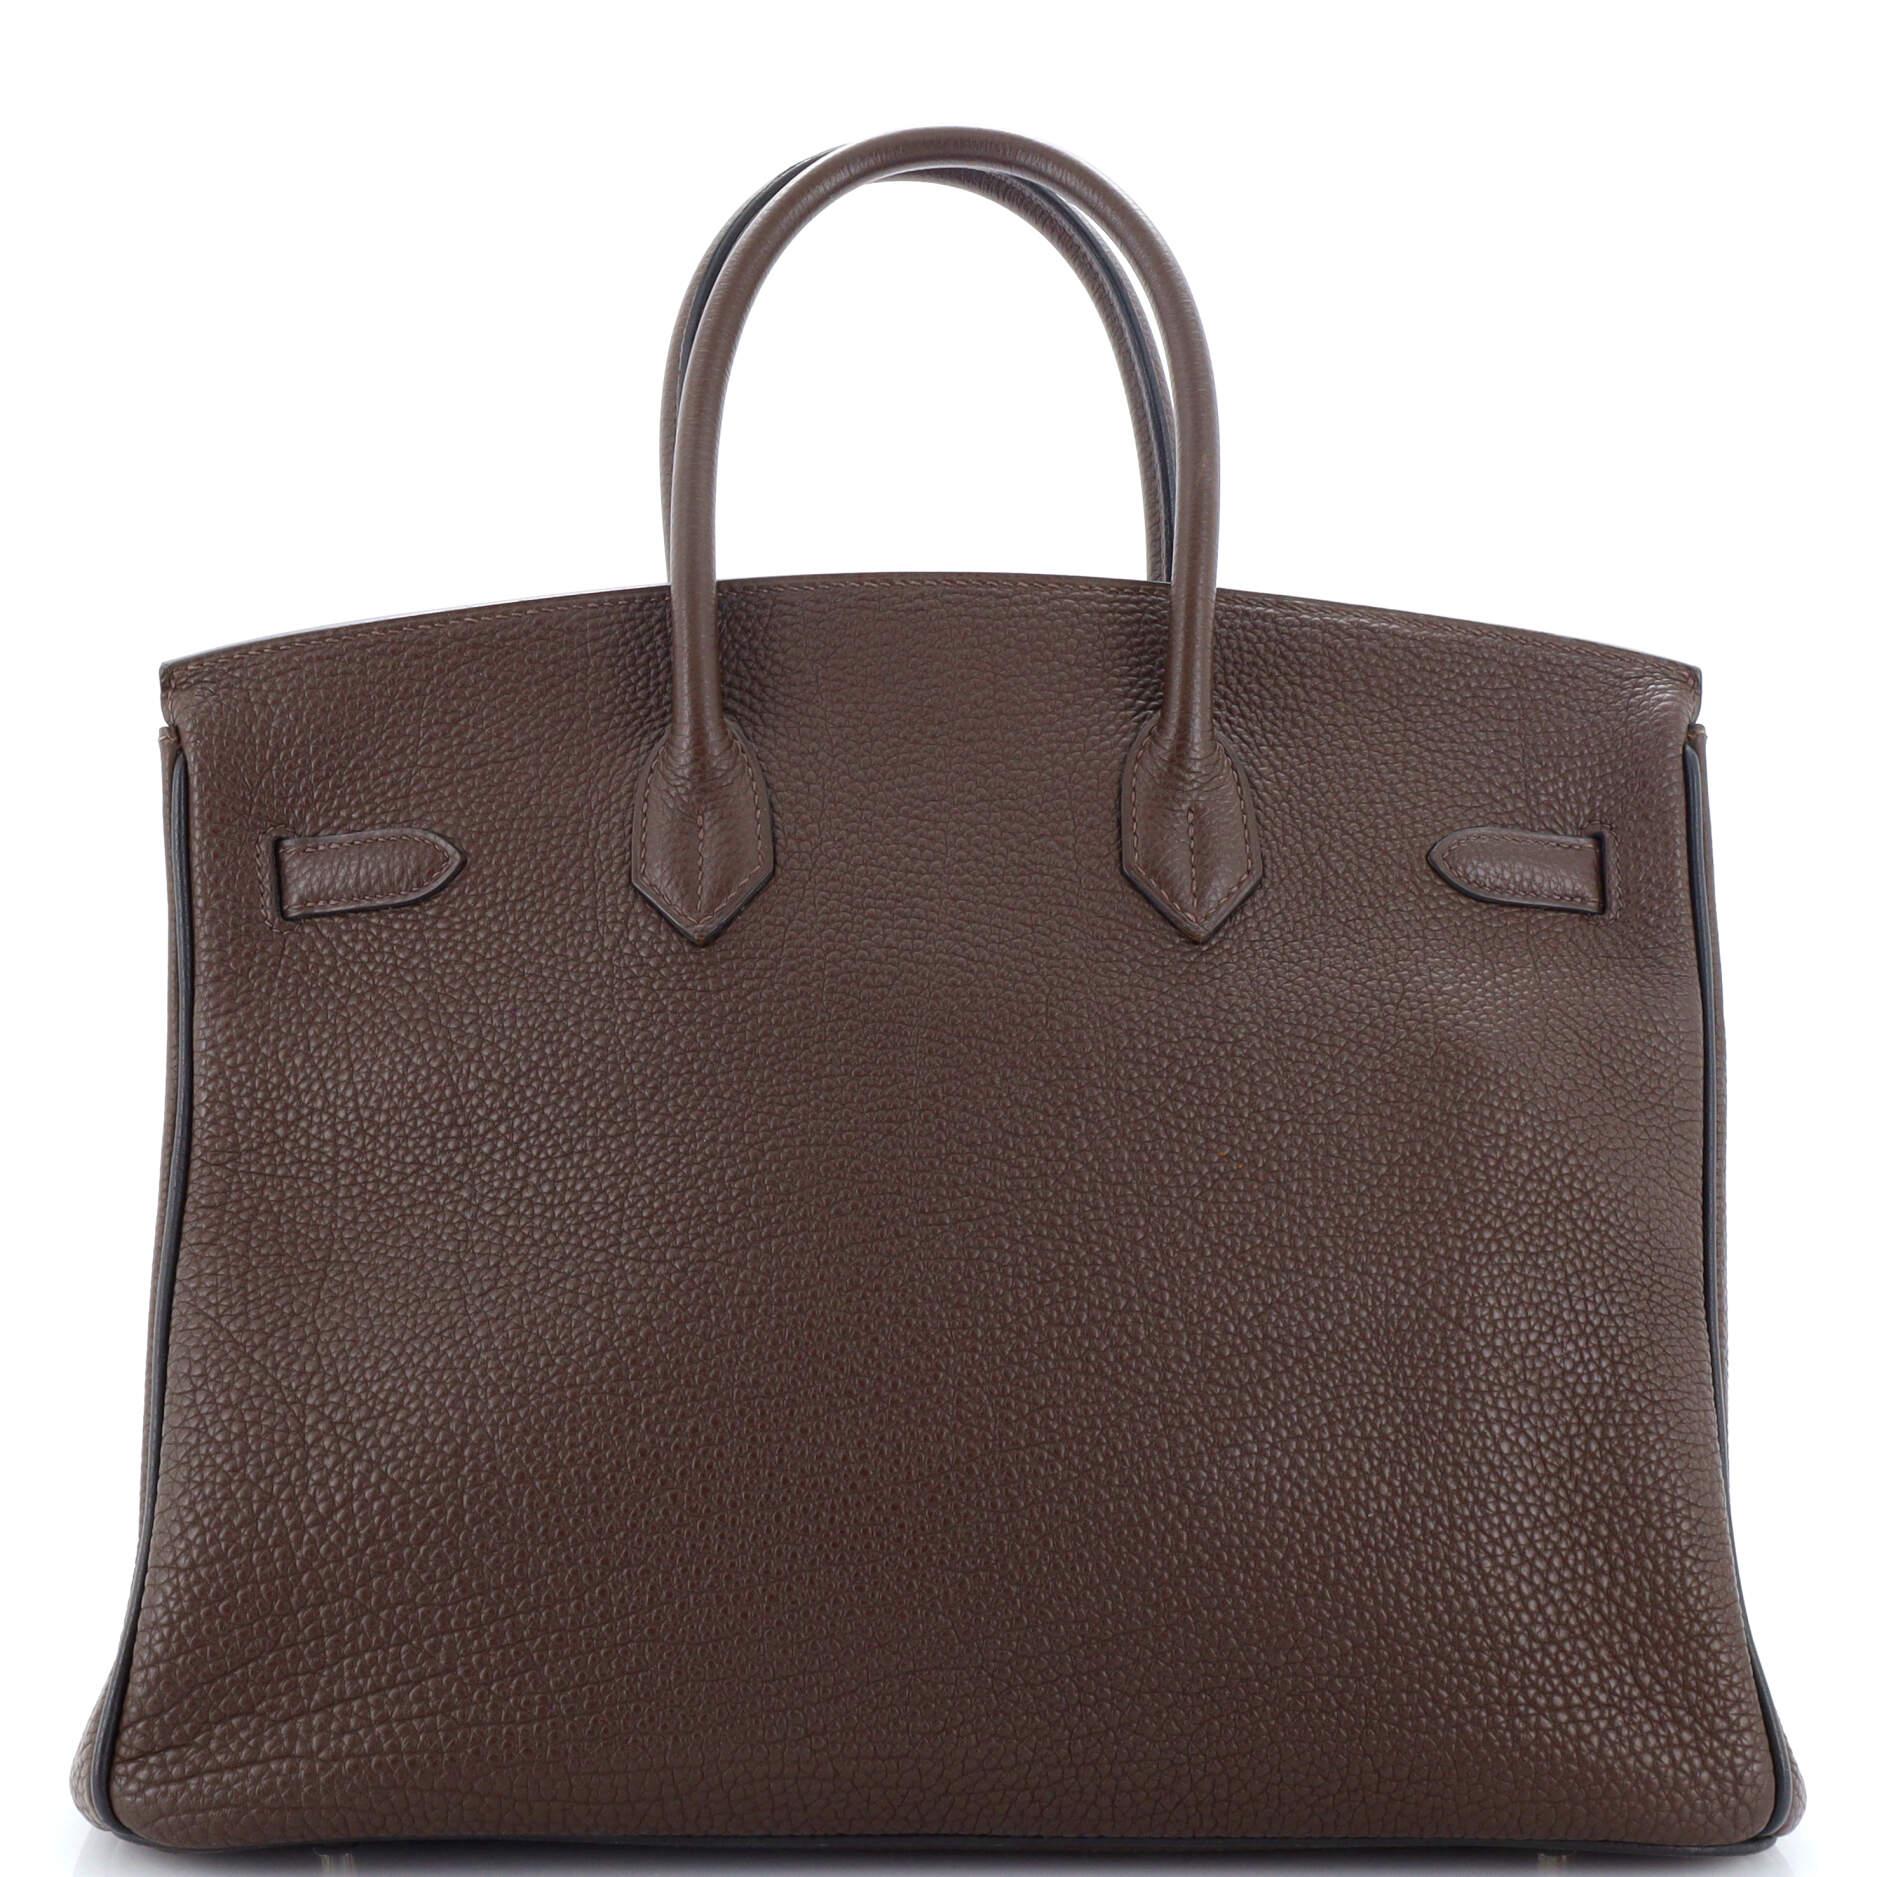 Women's Hermes Birkin Handbag Bicolor Togo with Palladium Hardware 35